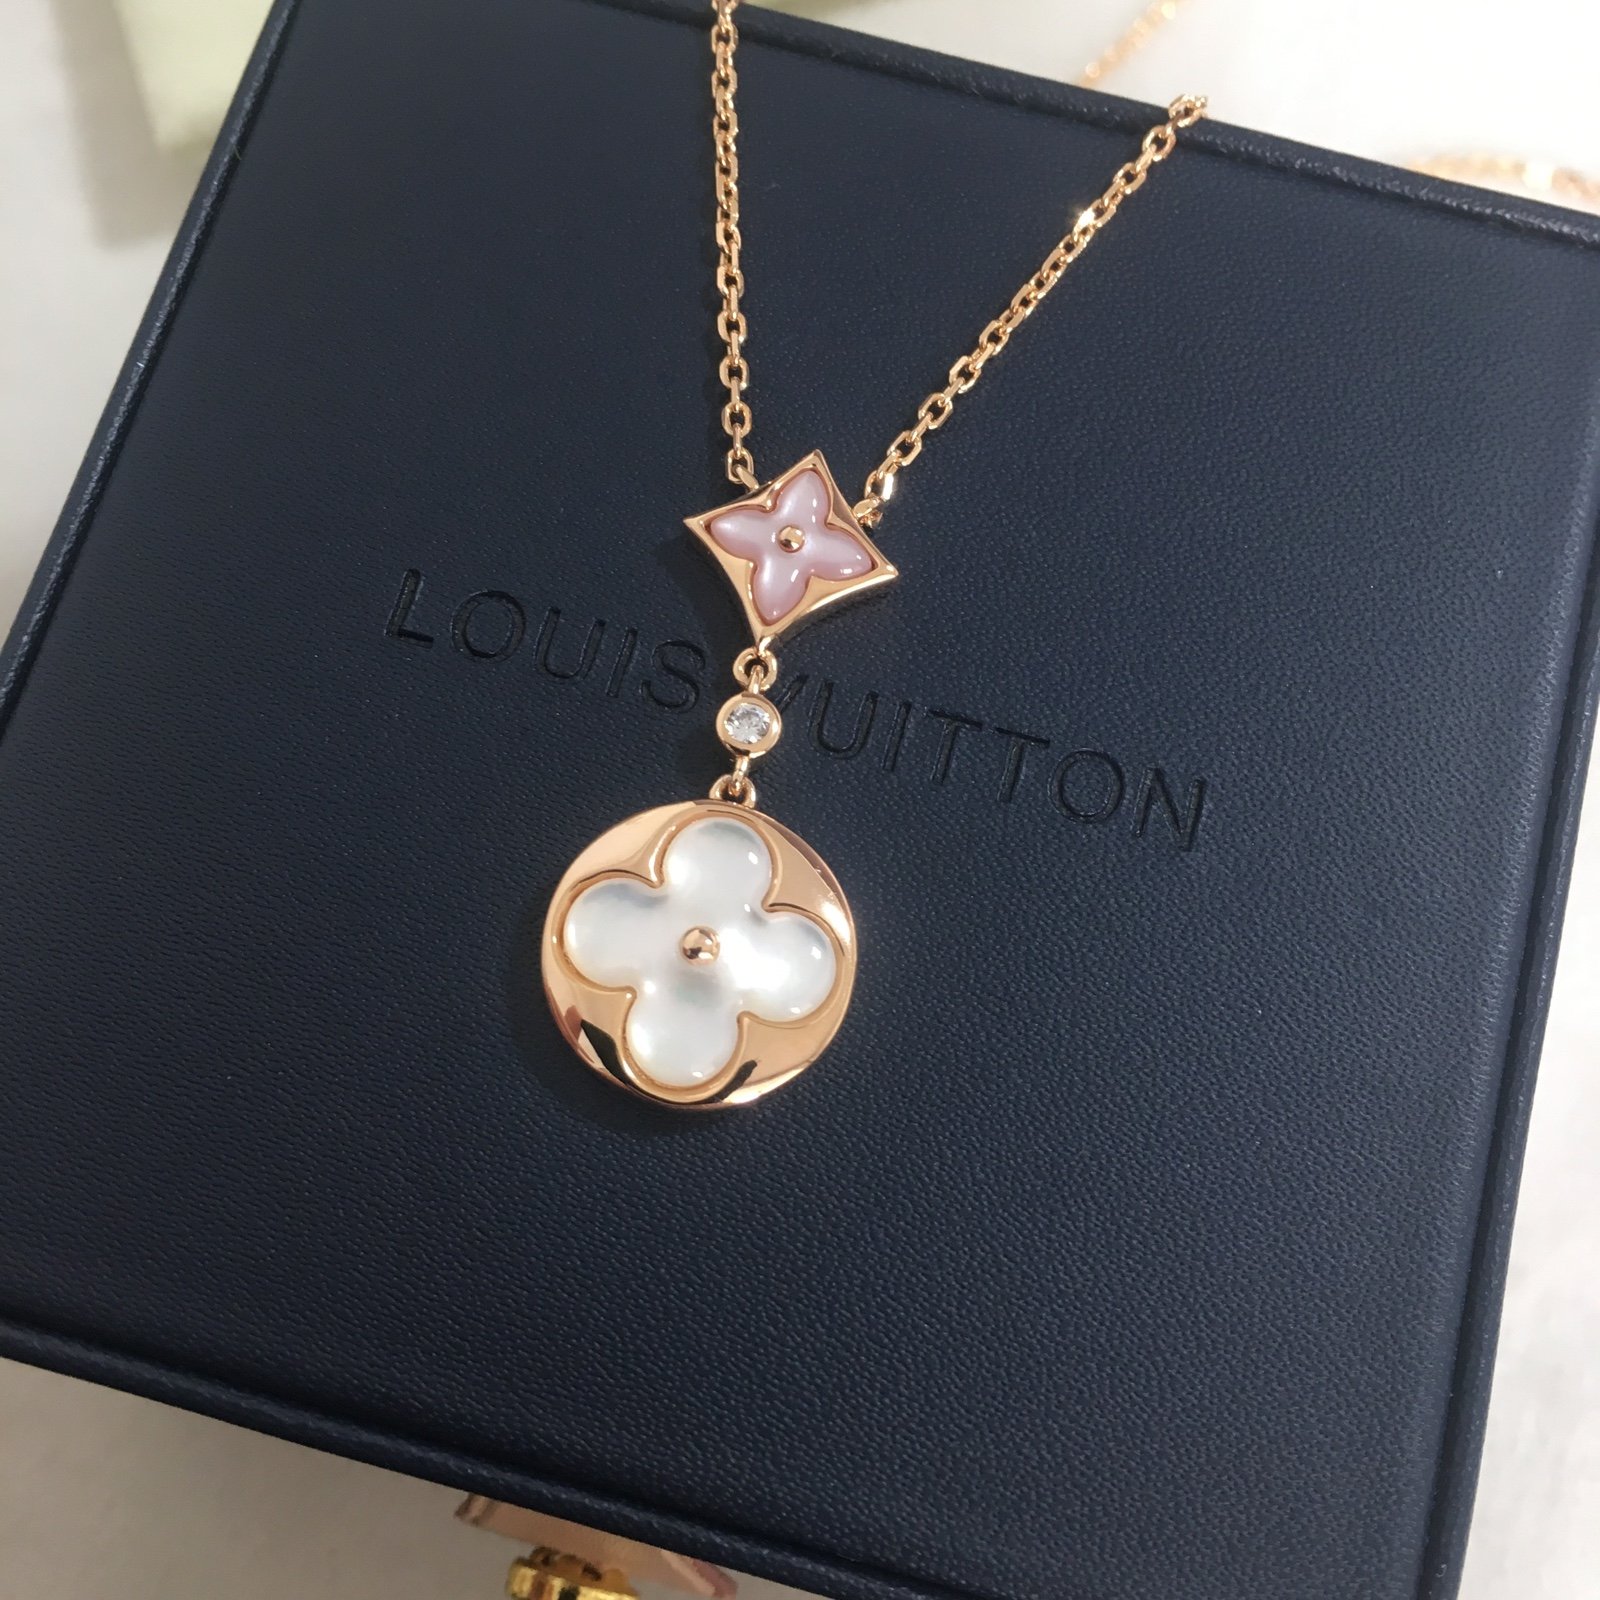 Louis Vuitton pink necklace AzyJpa6rZ